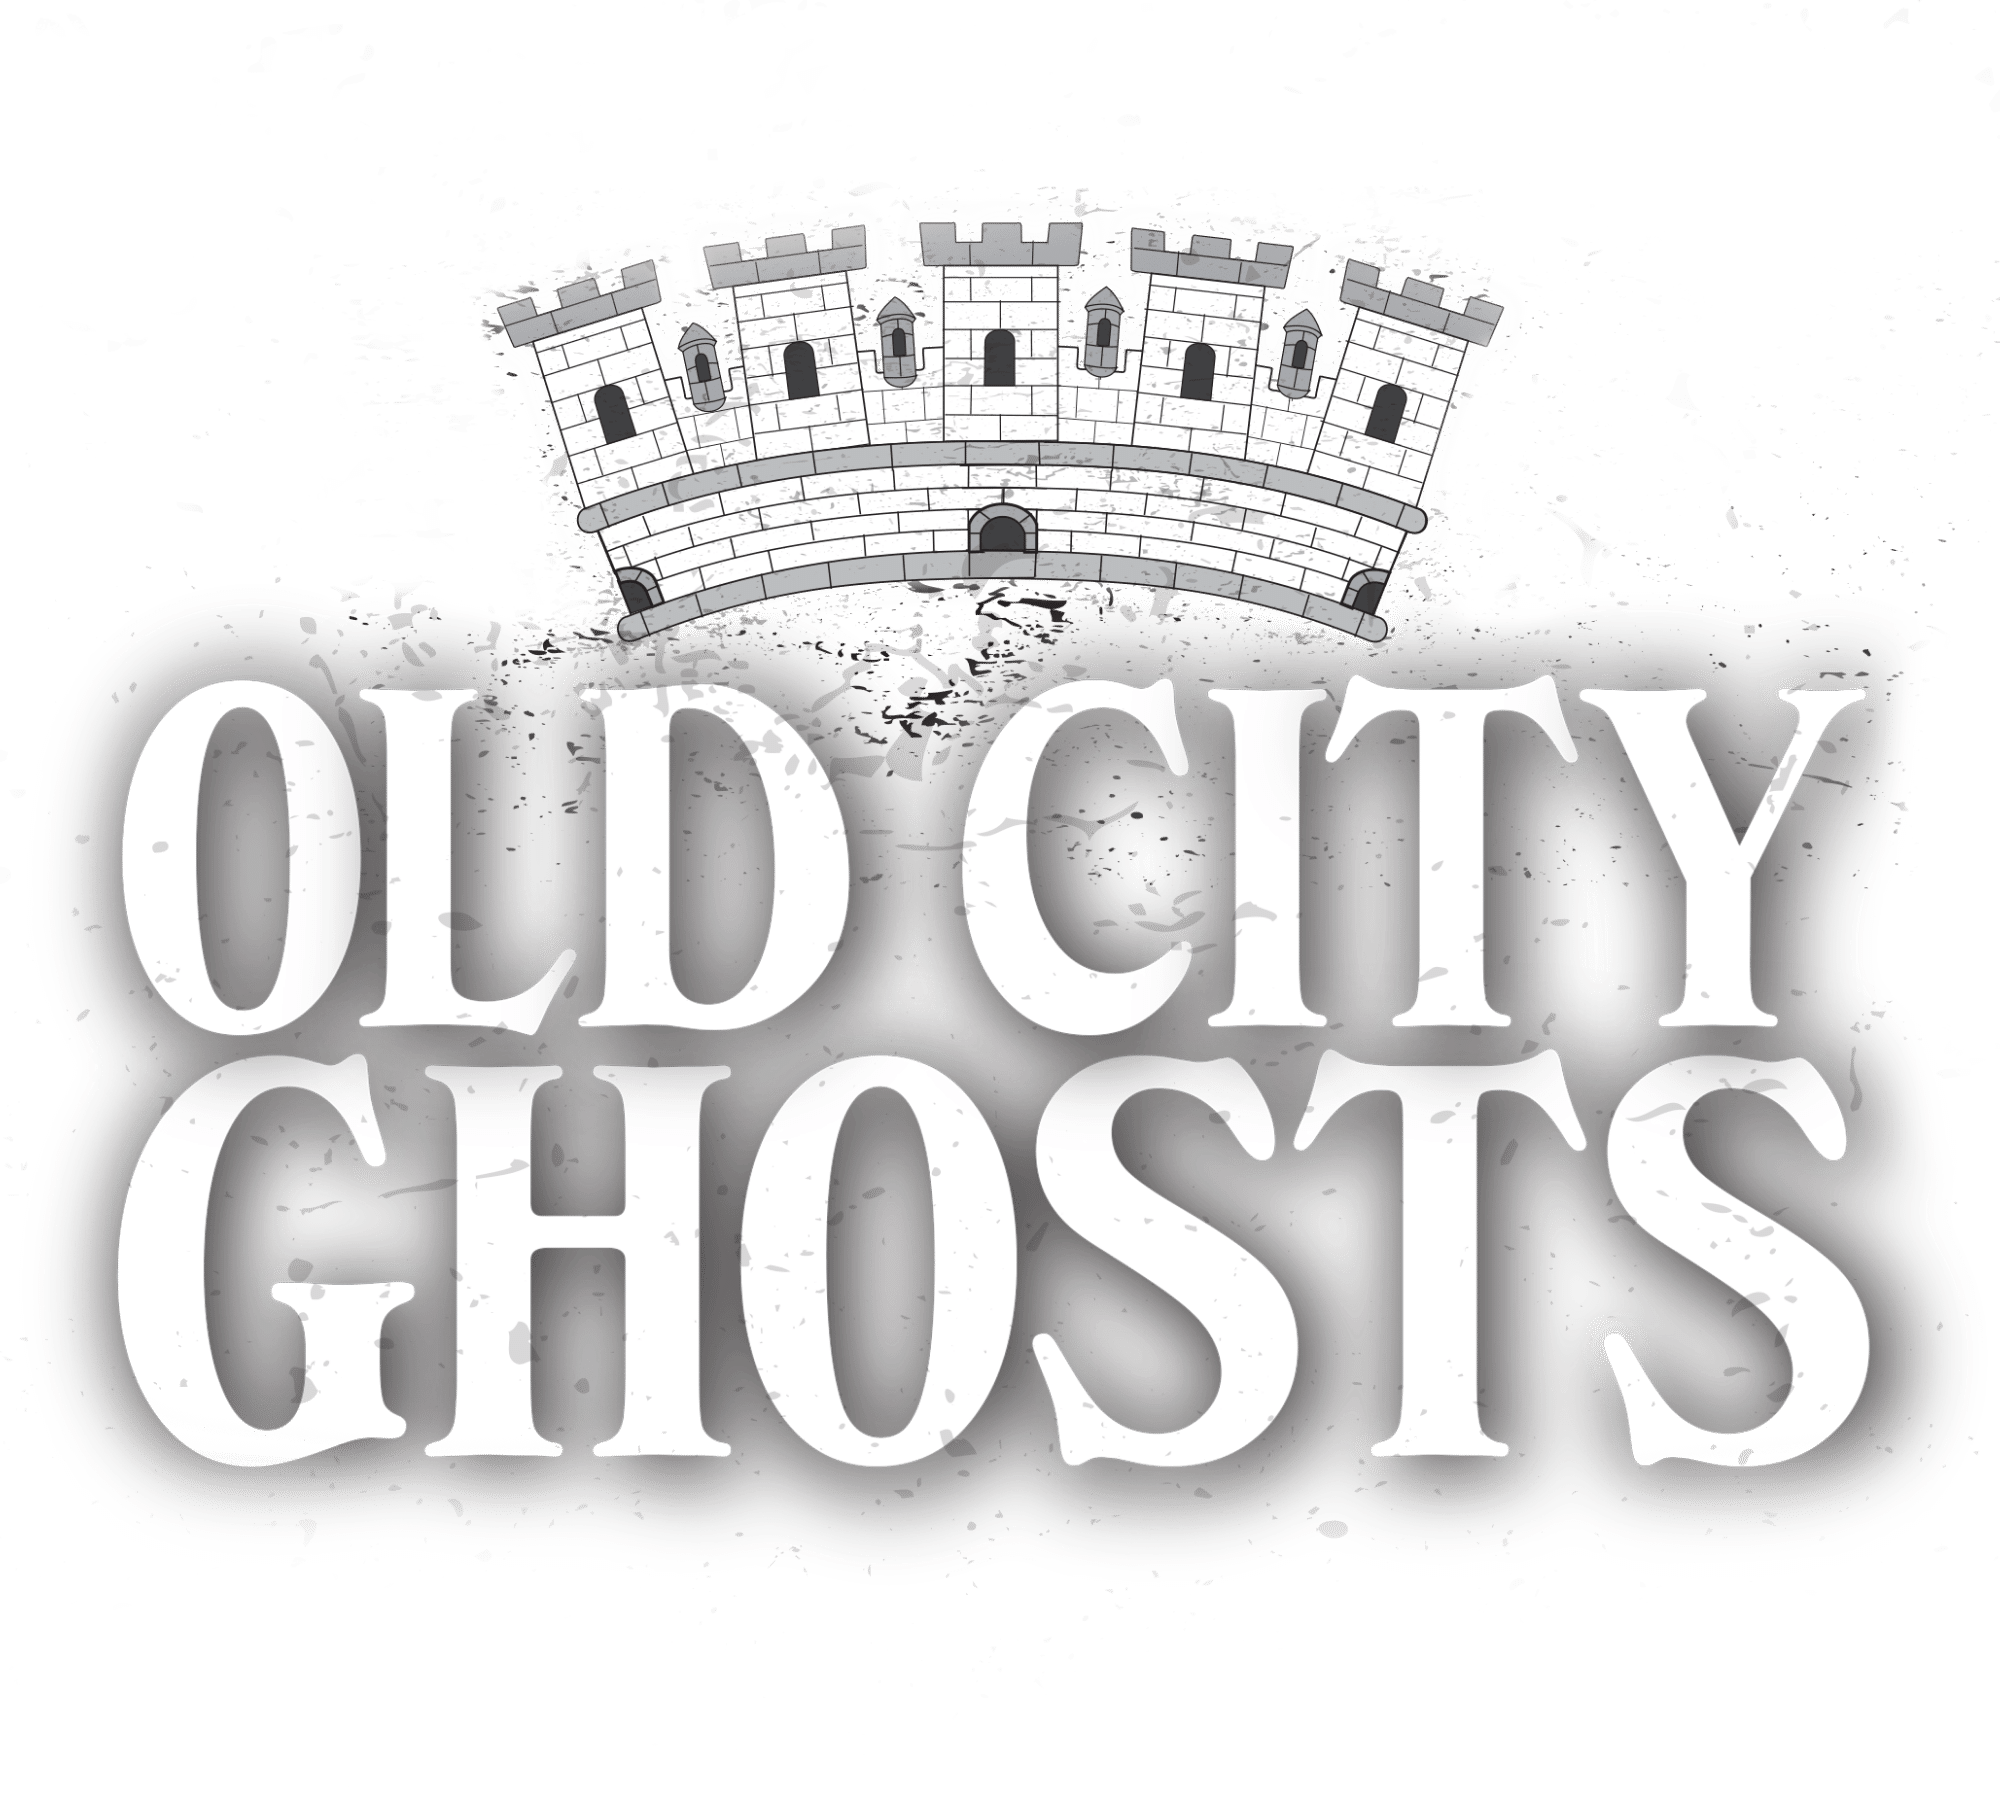 St. Augustine Ghosts | St. Augustine, FL | US Ghost Adventures